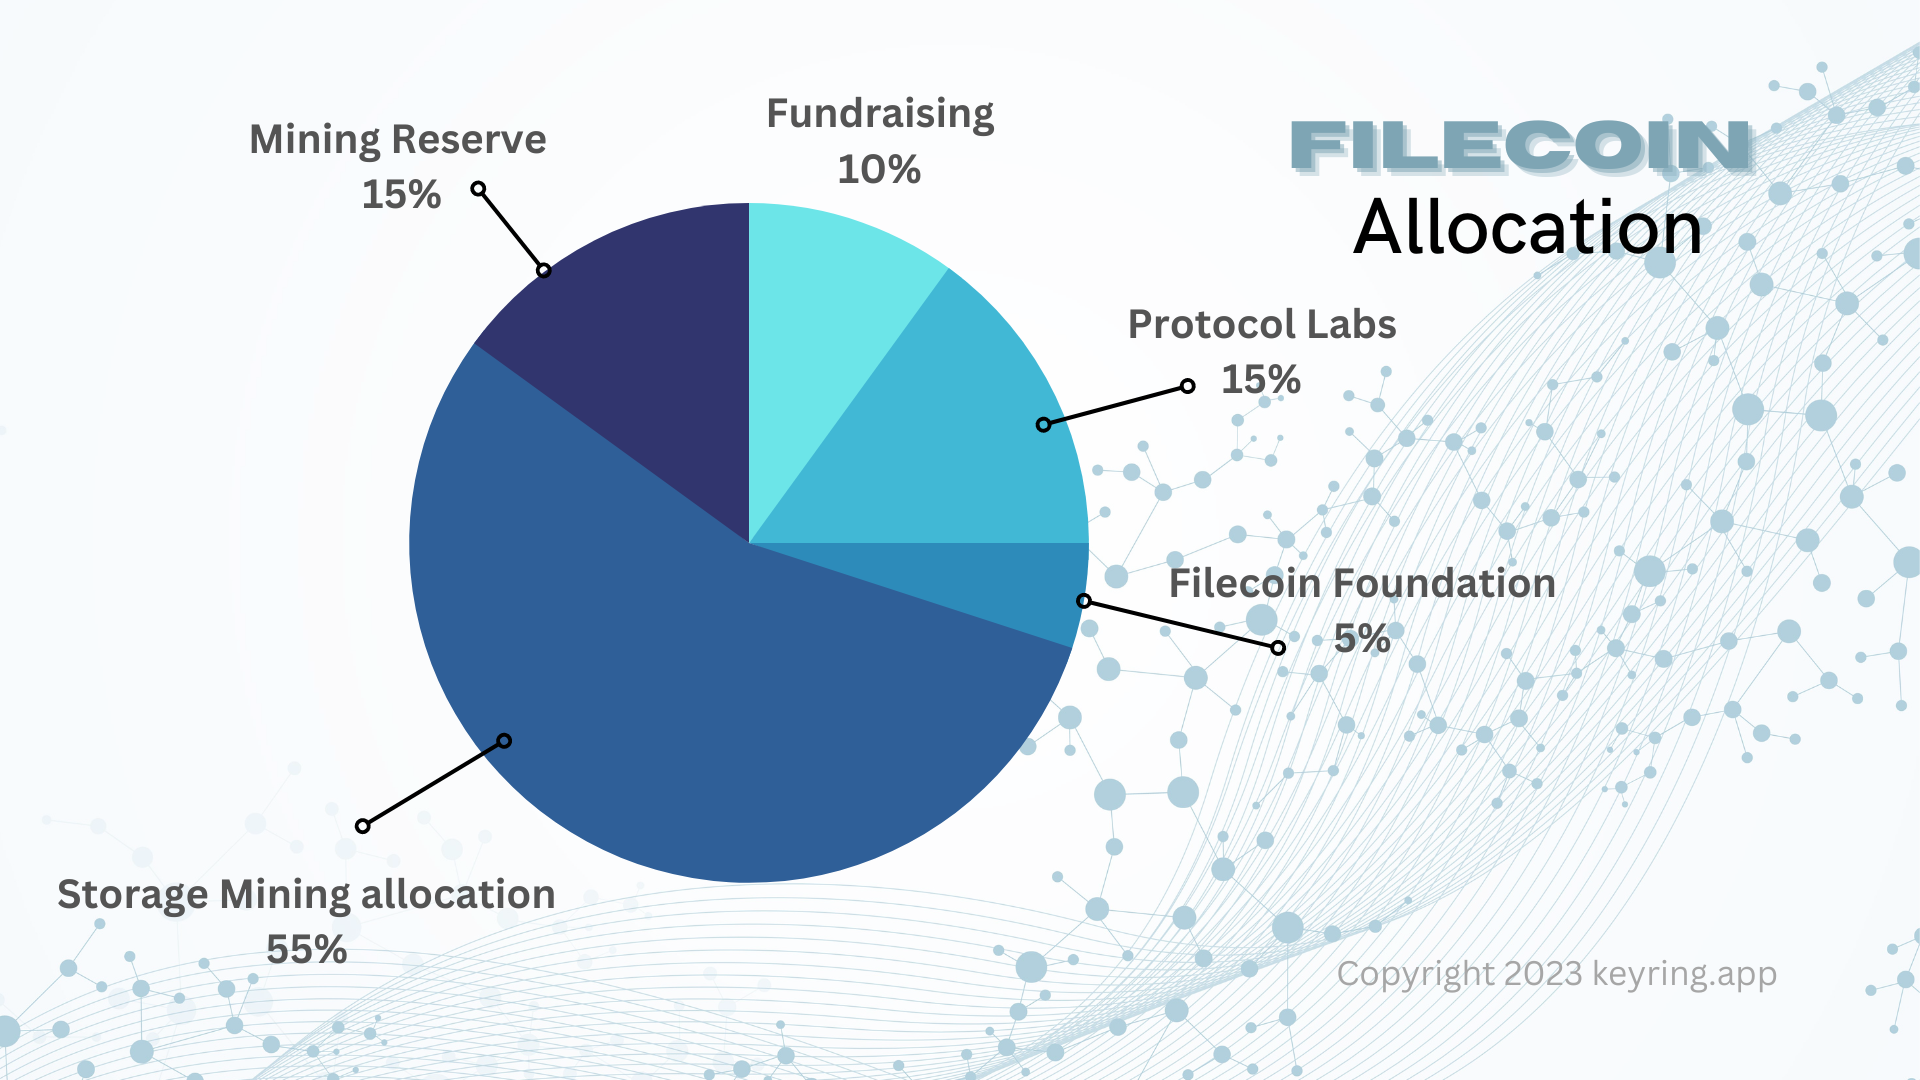 Filecoin Allocation